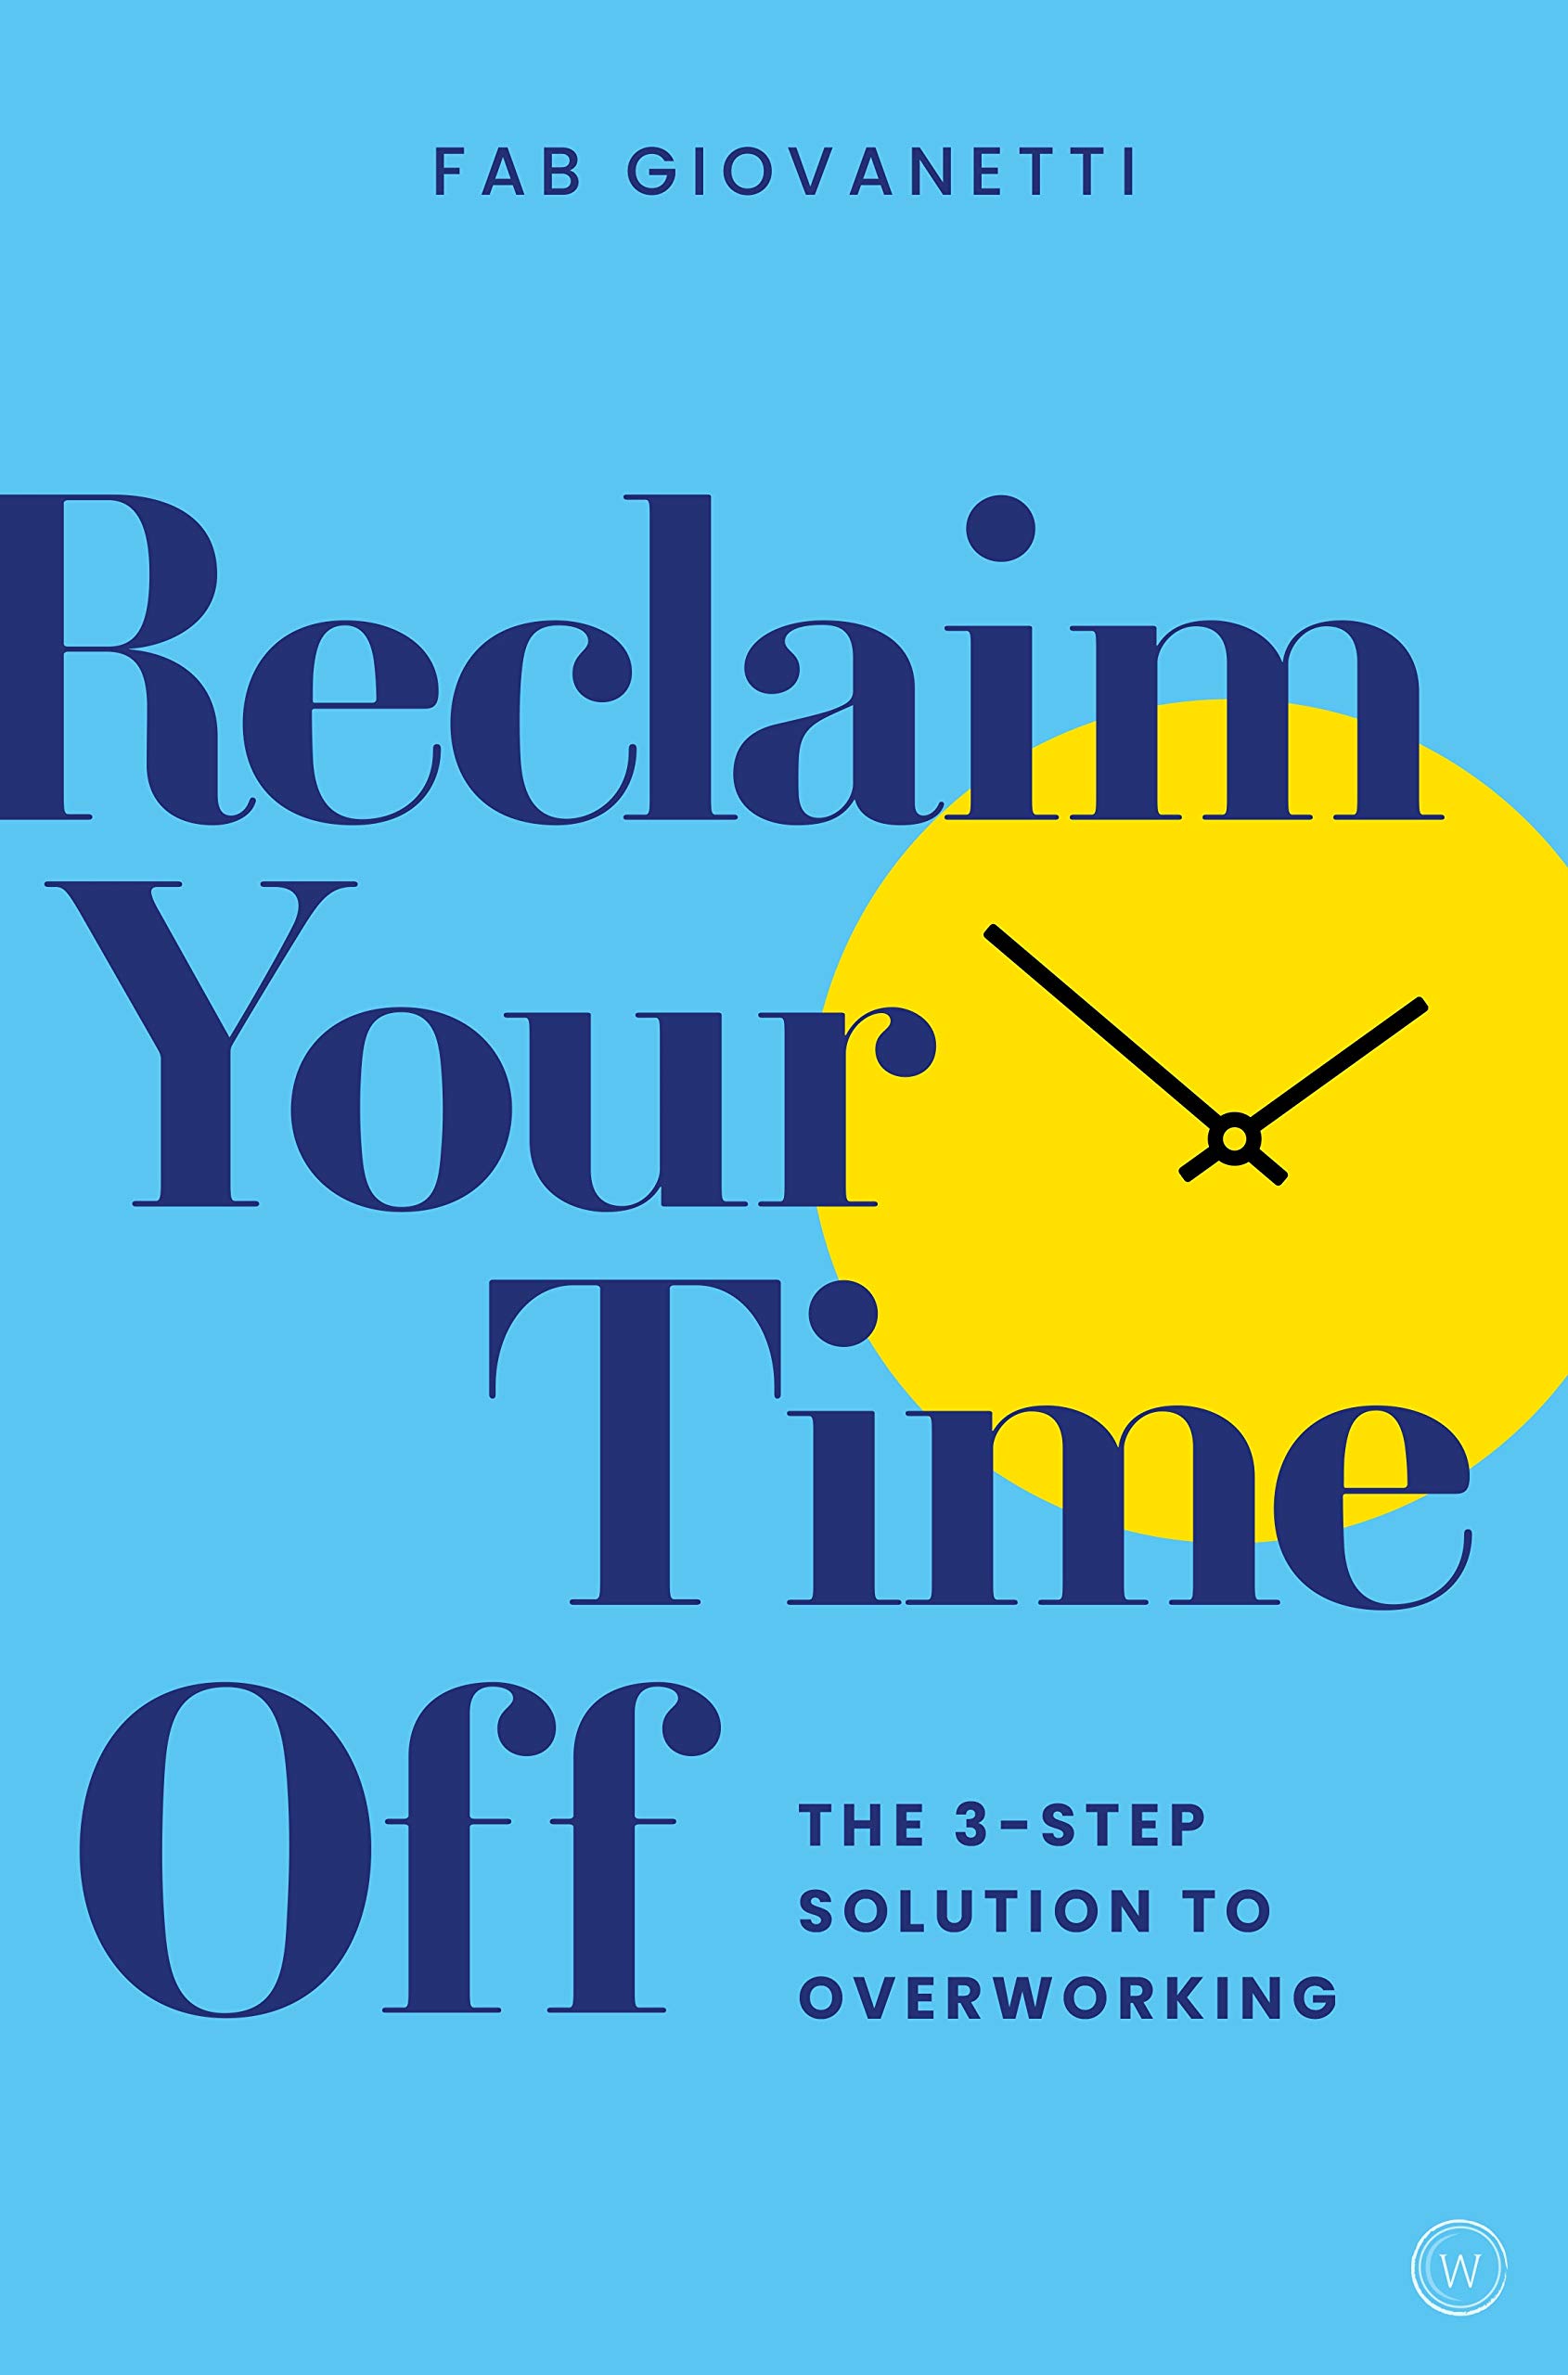 Vezi detalii pentru Reclaim Your Time Off | Fab Giovanetti